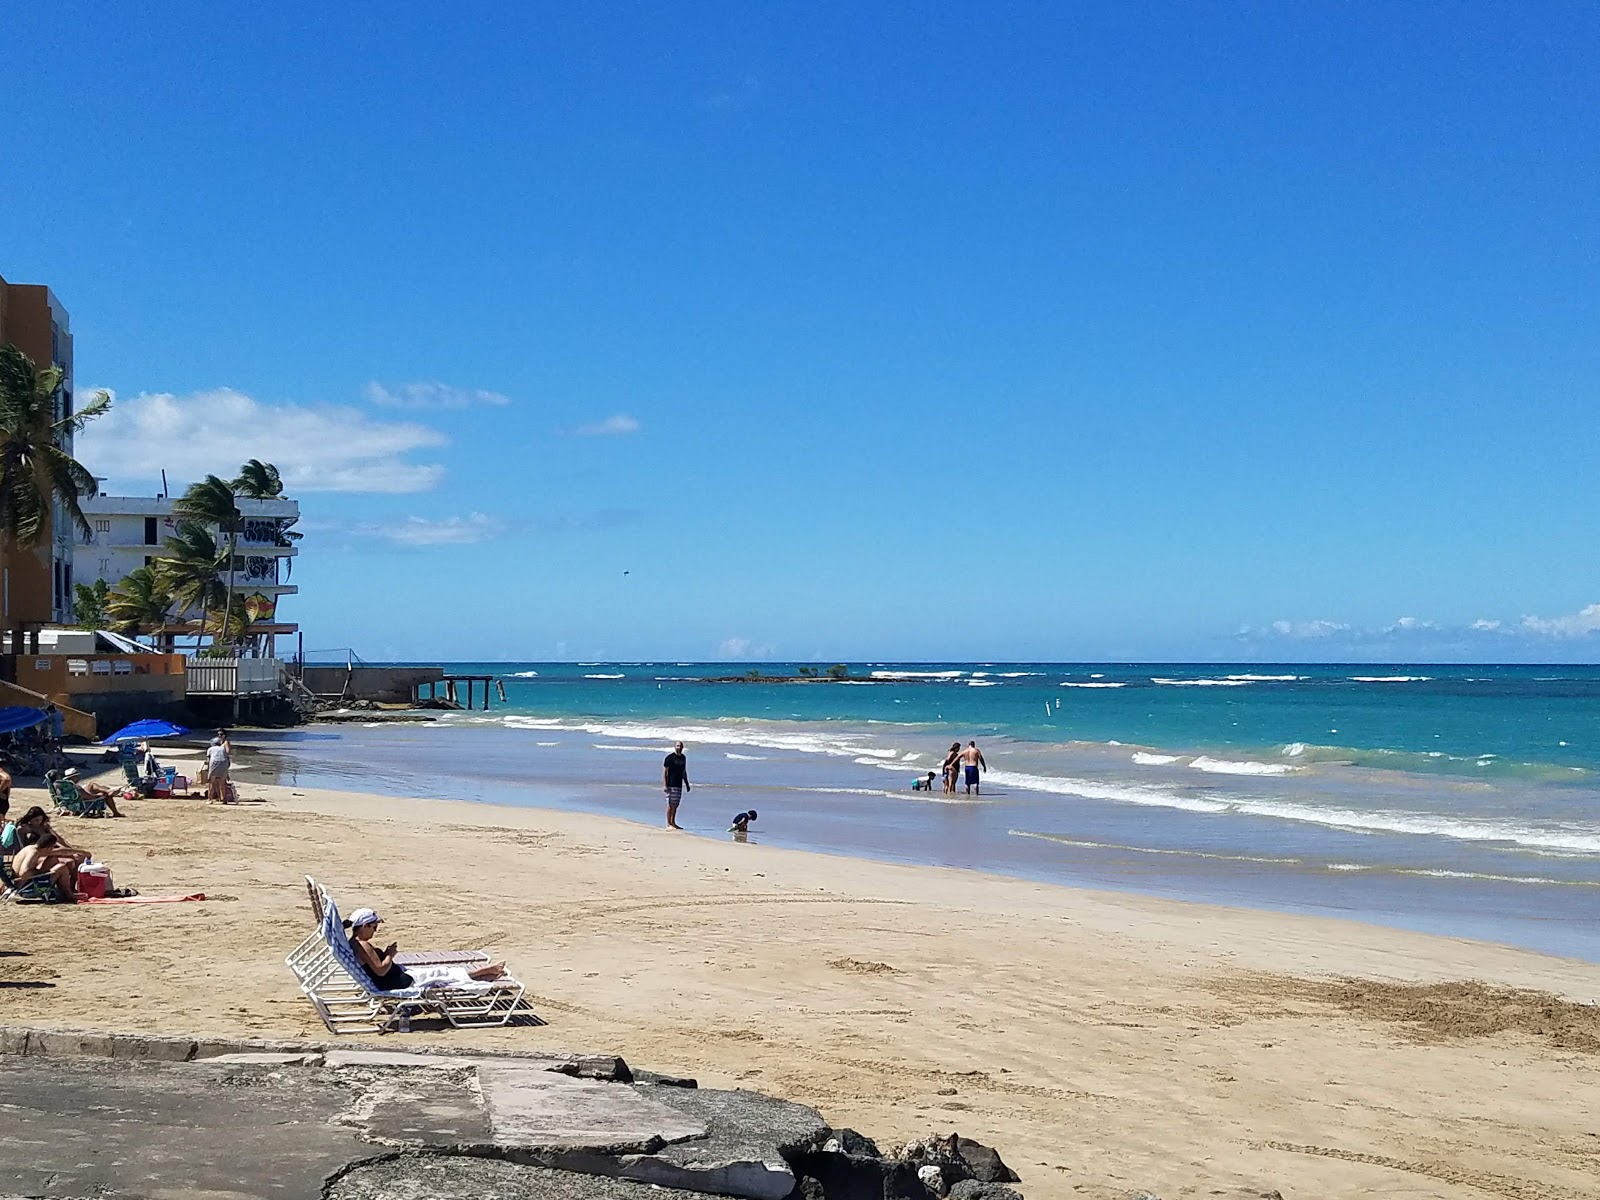 Fotografie cu Isla Verde beach cu nivelul de curățenie in medie